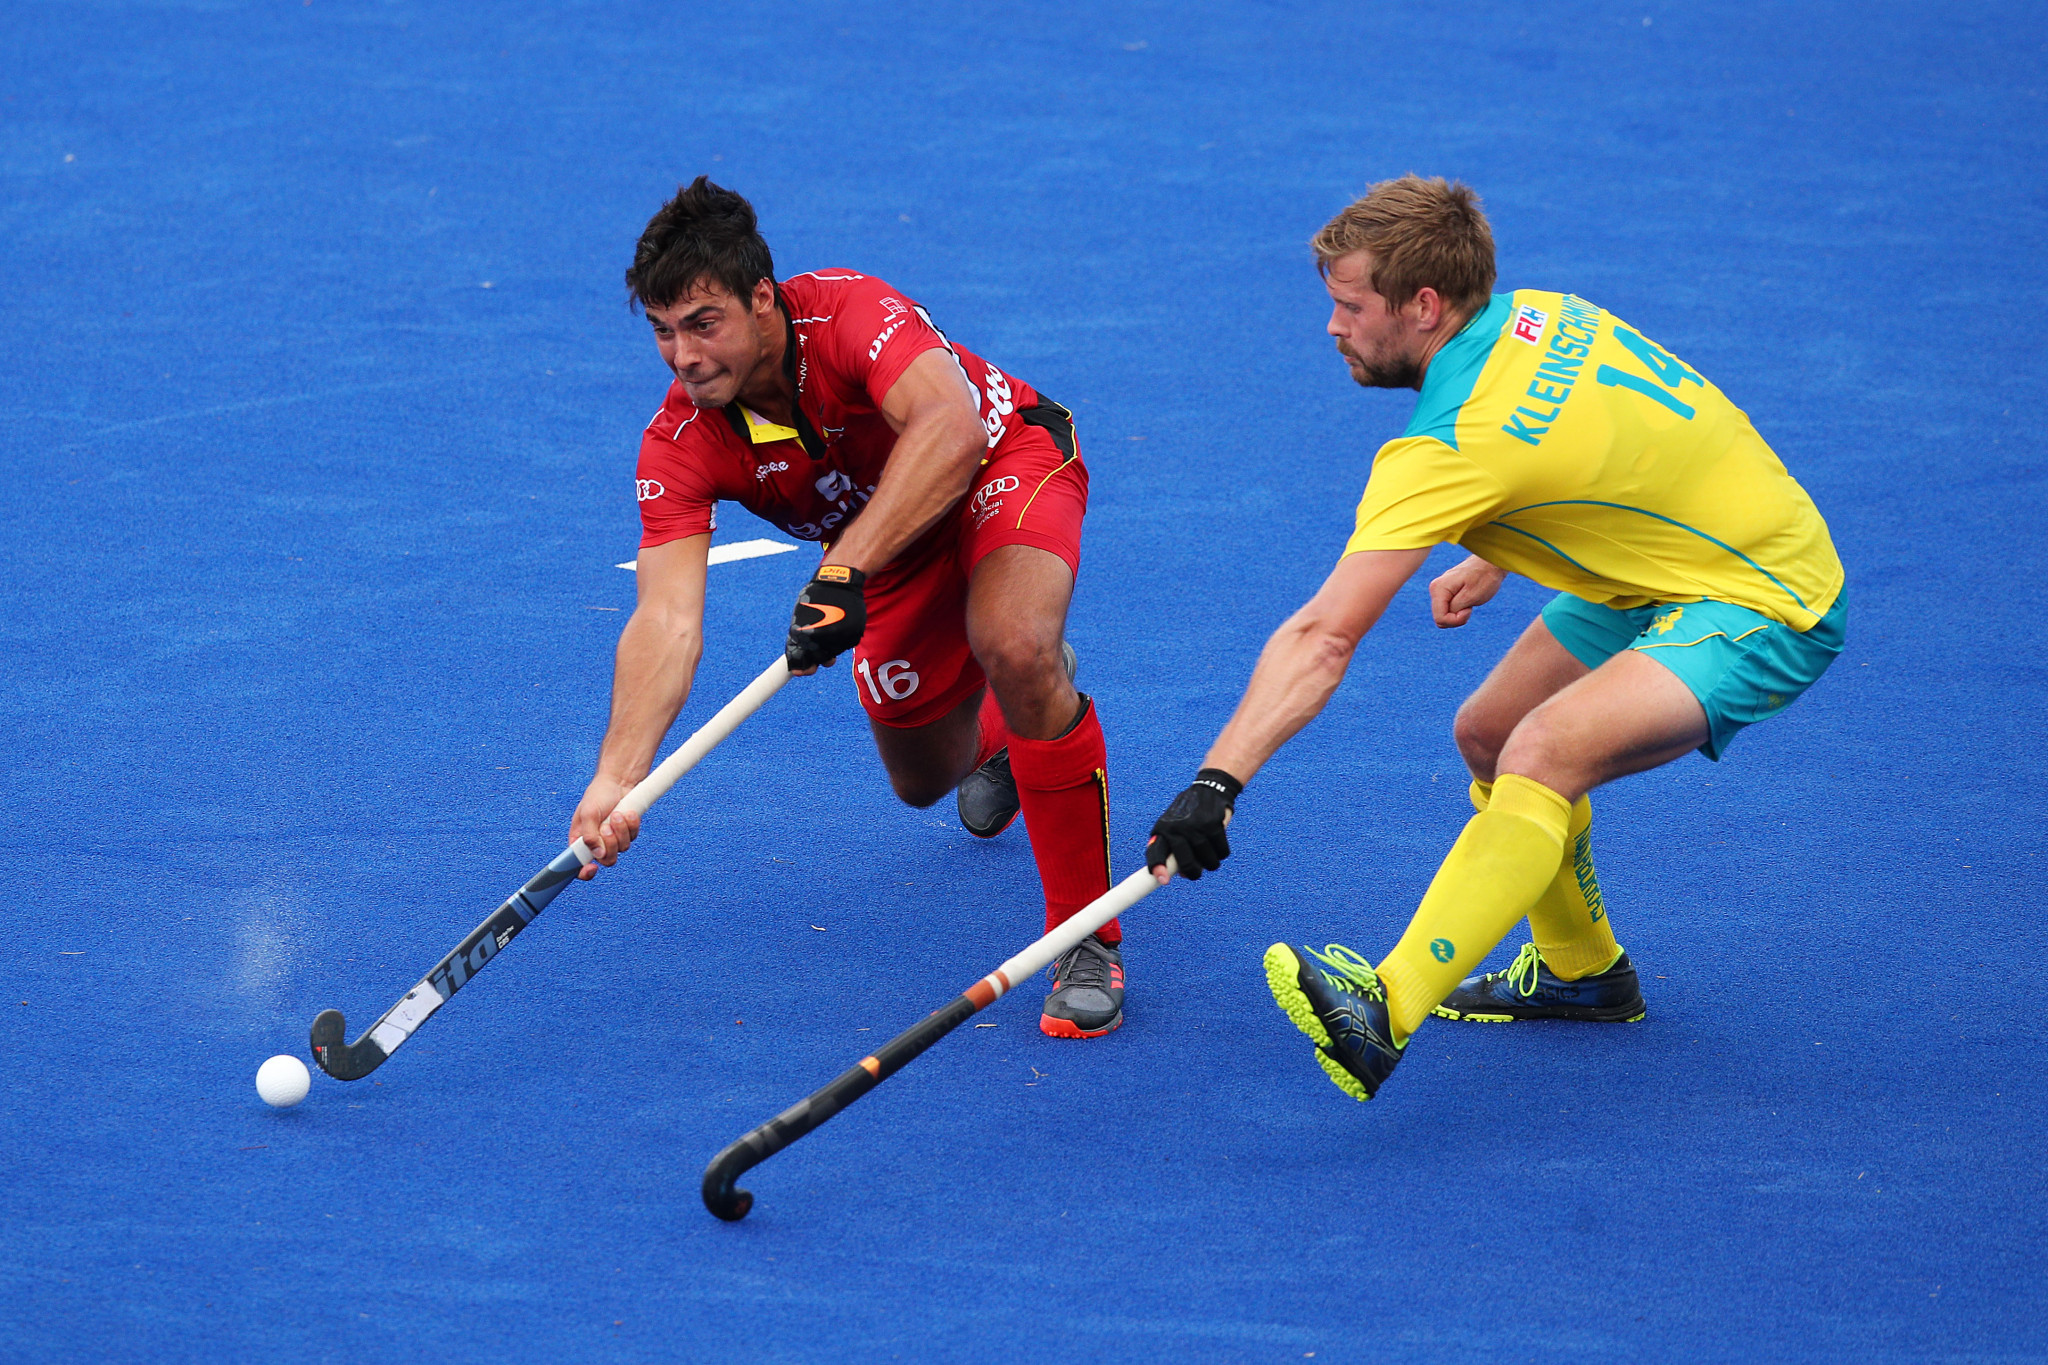 Belgium claim two victories against Australia in FIH Pro League